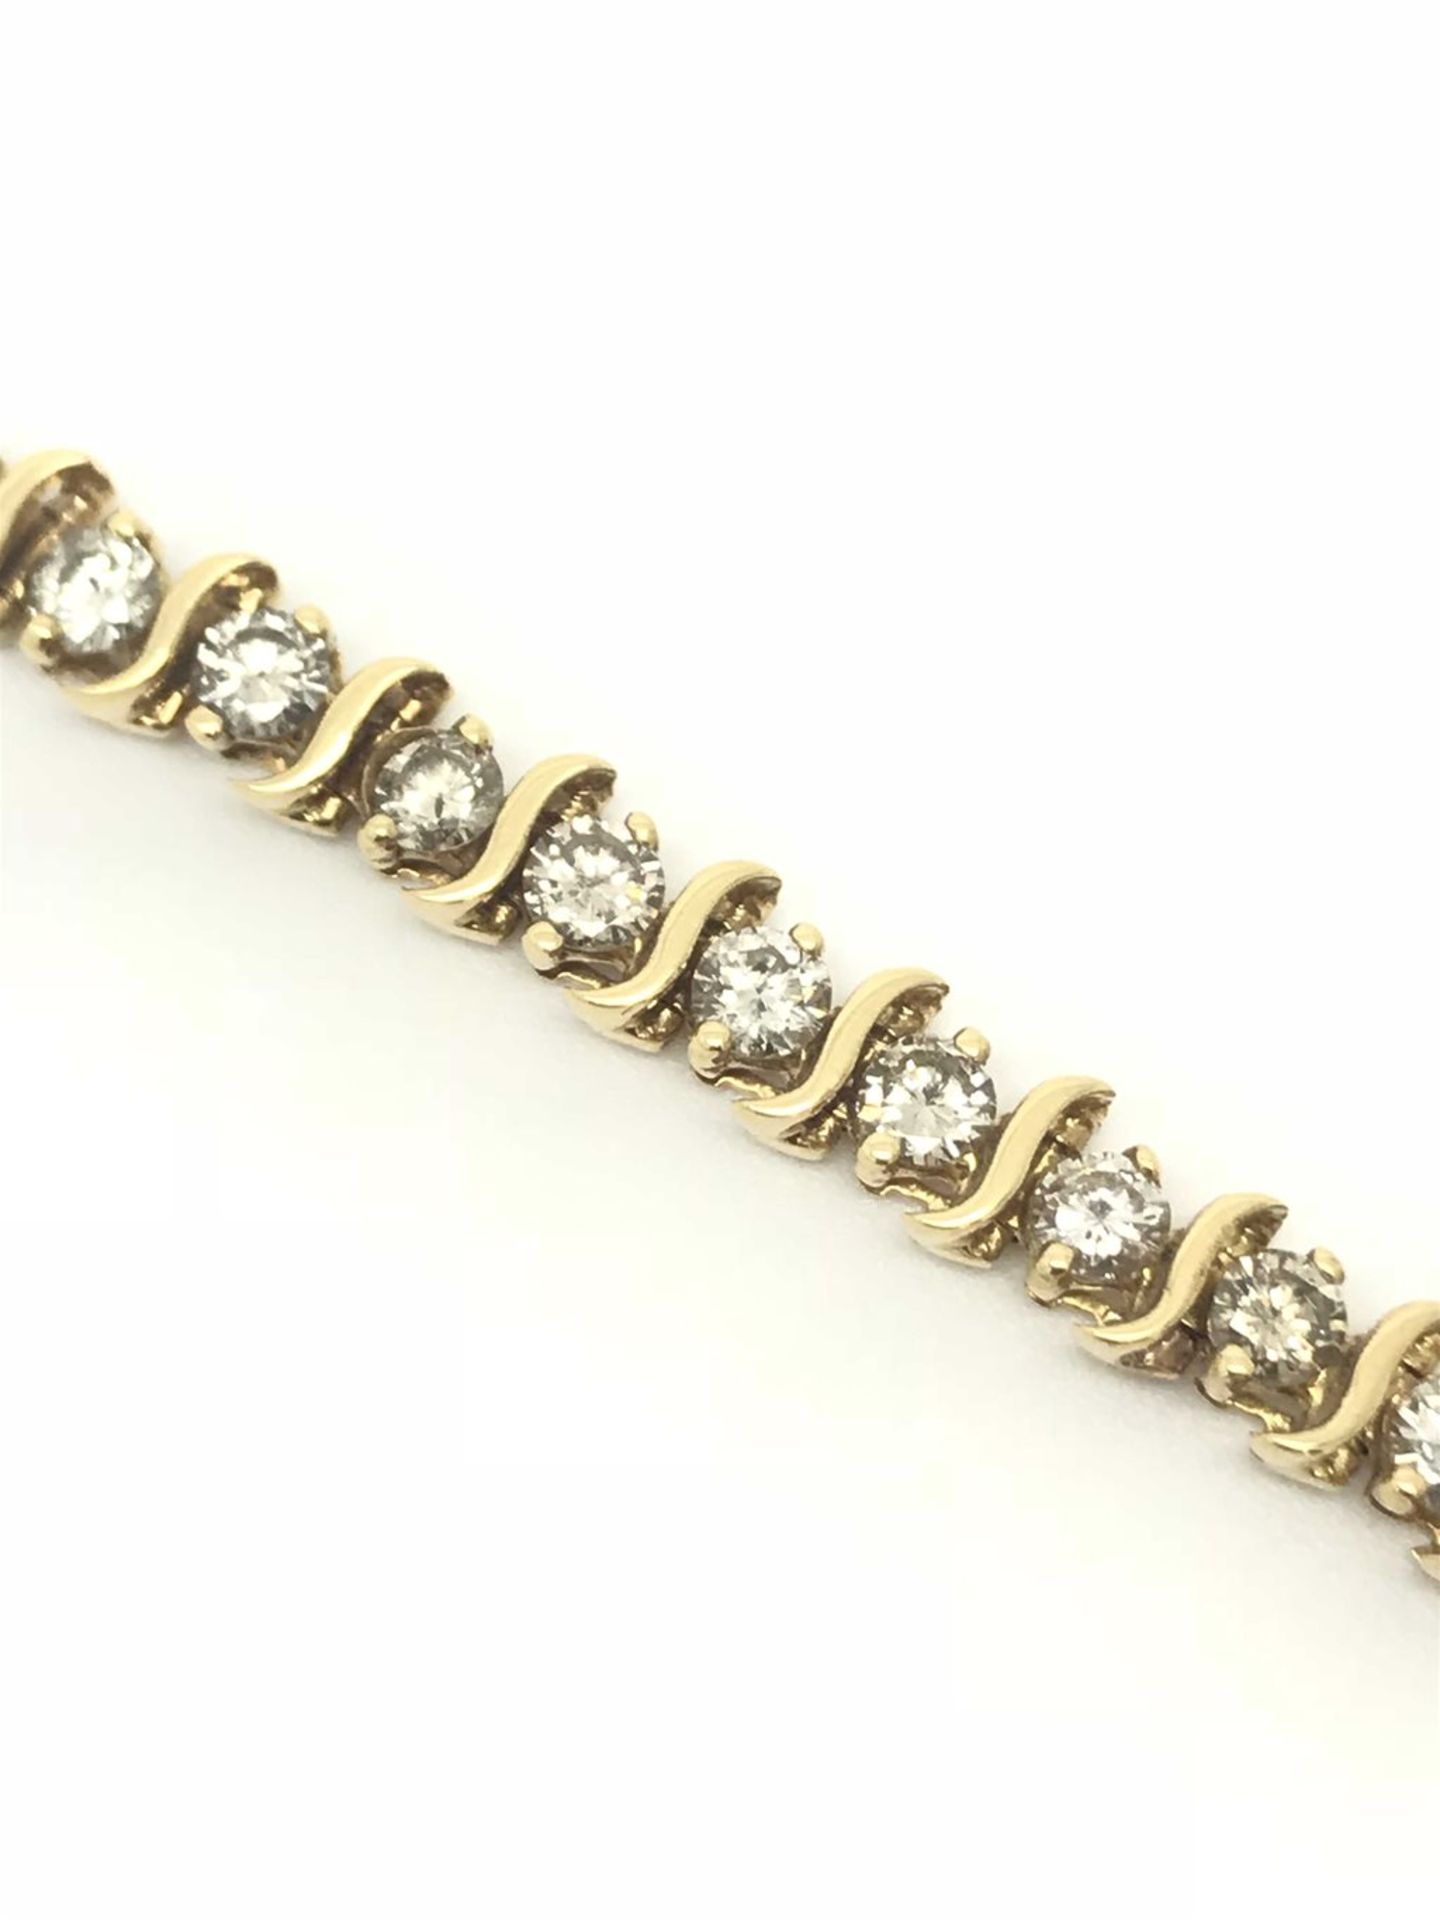 5.10ct Diamond Tennis Bracelet, 18ct Yellow Gold - Image 4 of 4